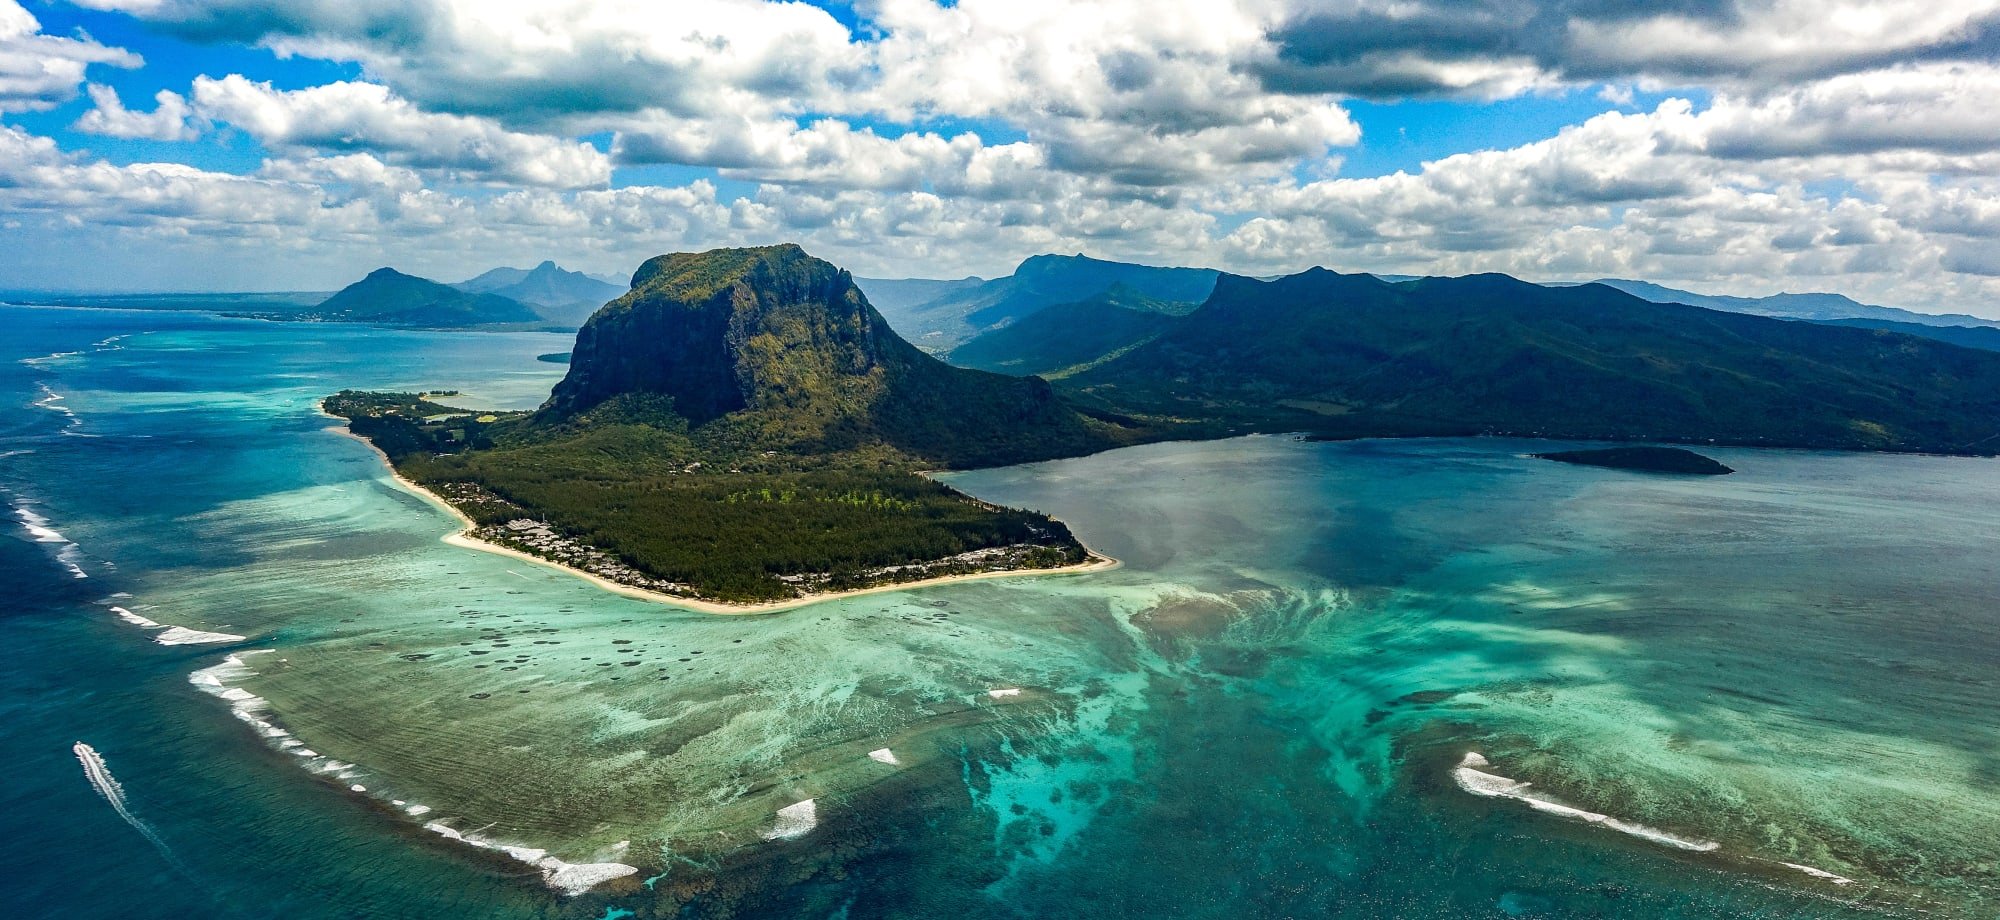 Wayfairer Travel Guide: Mauritius